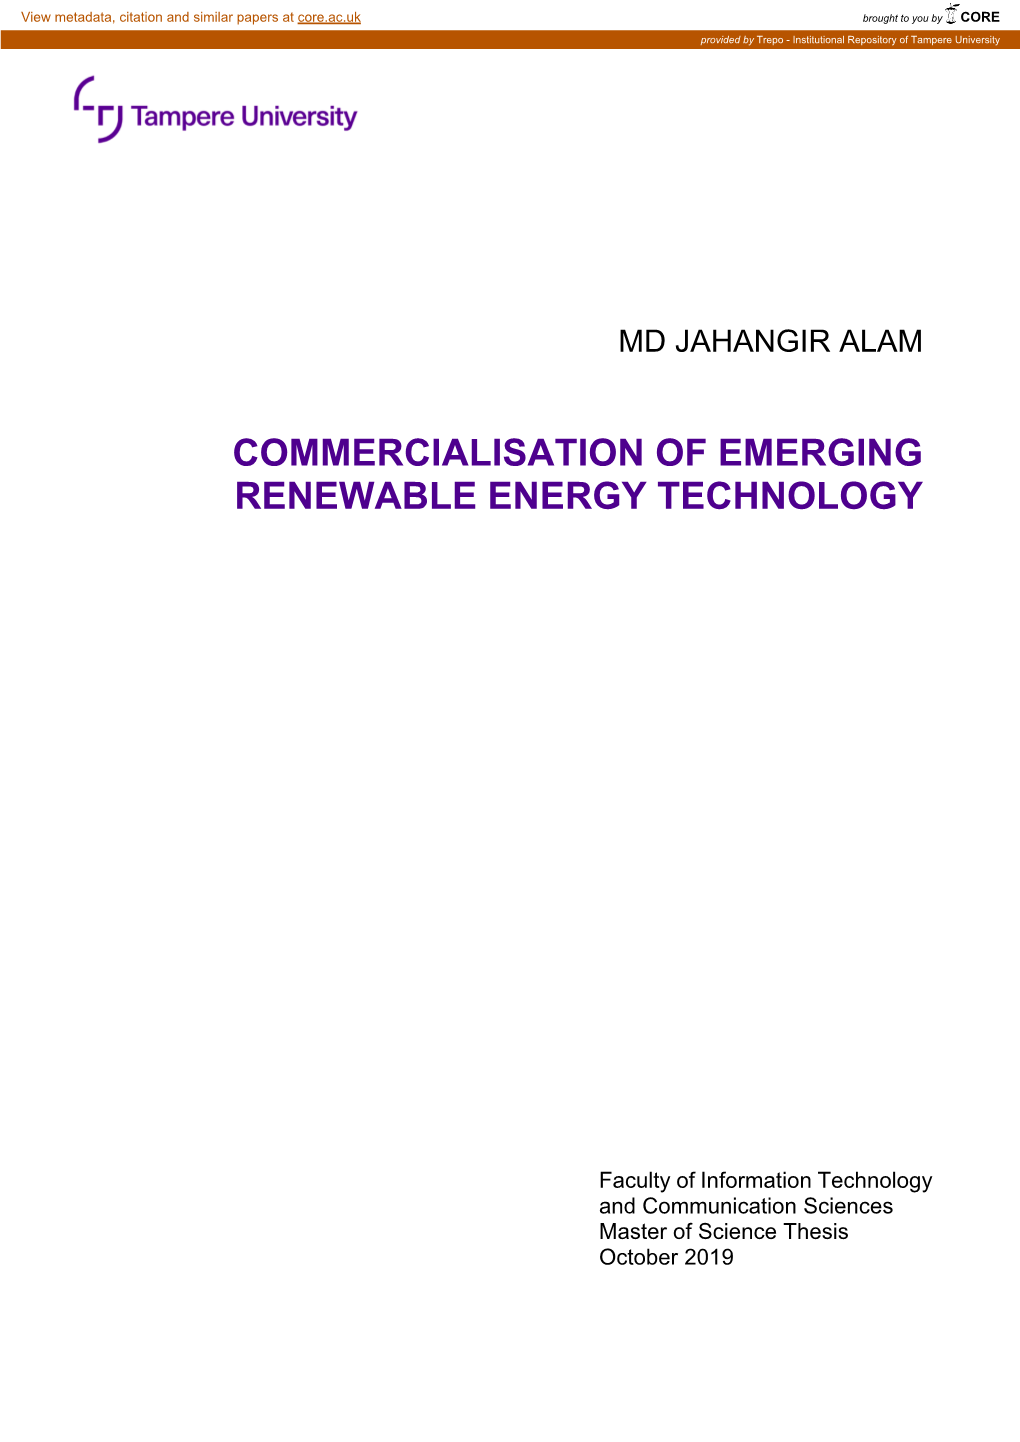 Commercialisation of Emerging Renewable Energy Technology